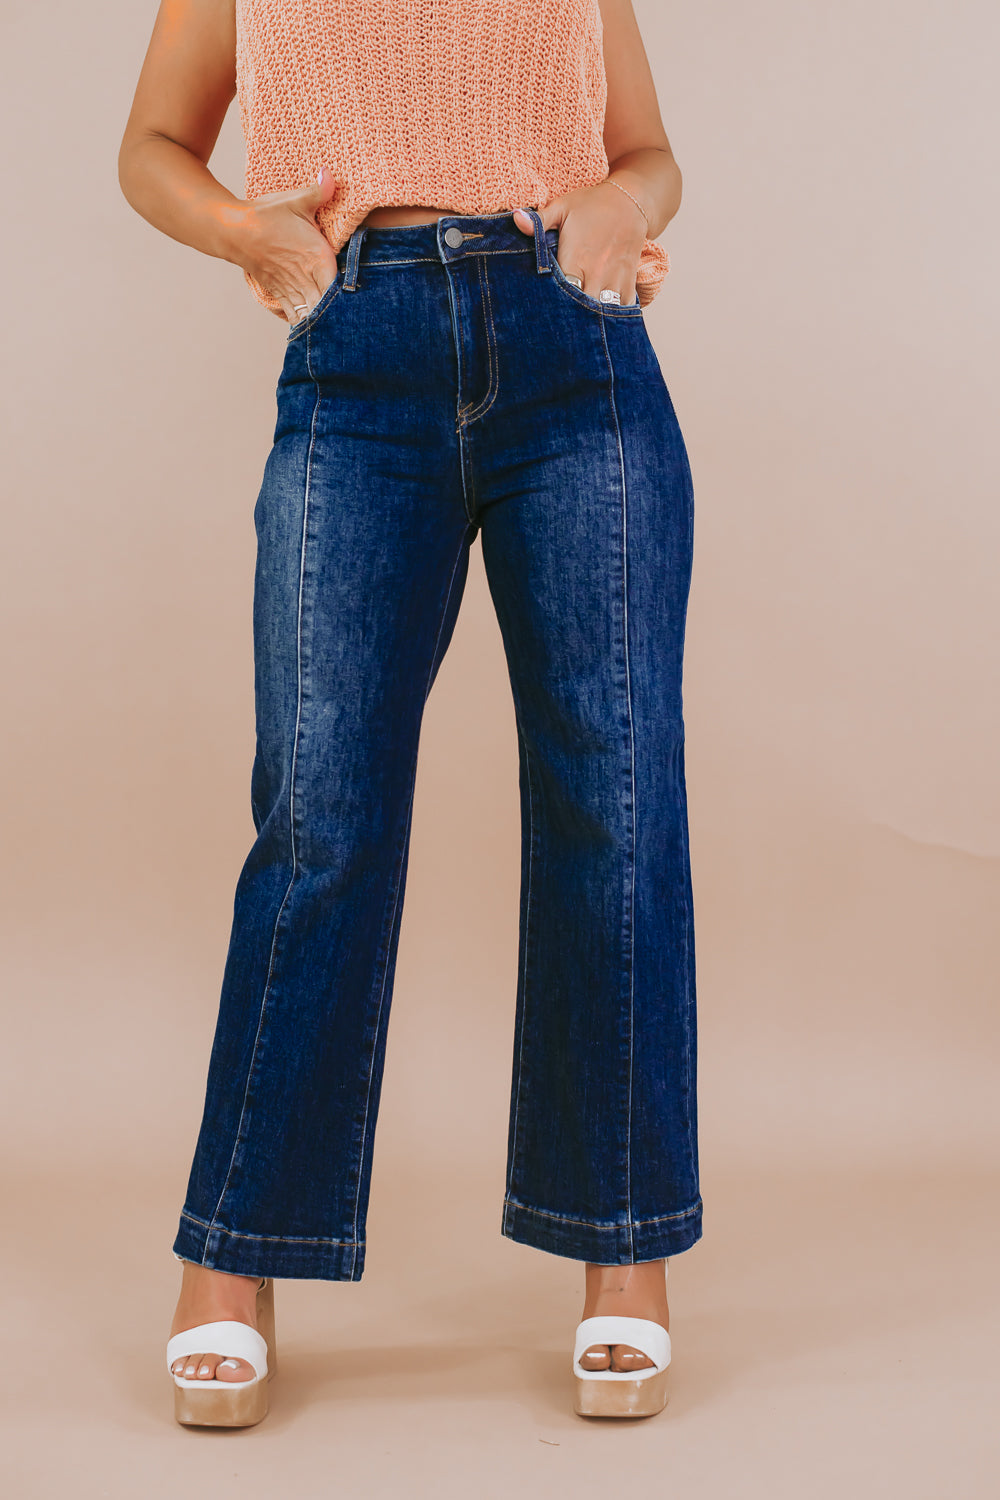 Risen Jeans Womens Juniors High Rise Wide-Leg Denim Pants (Dark Denim, 13)  